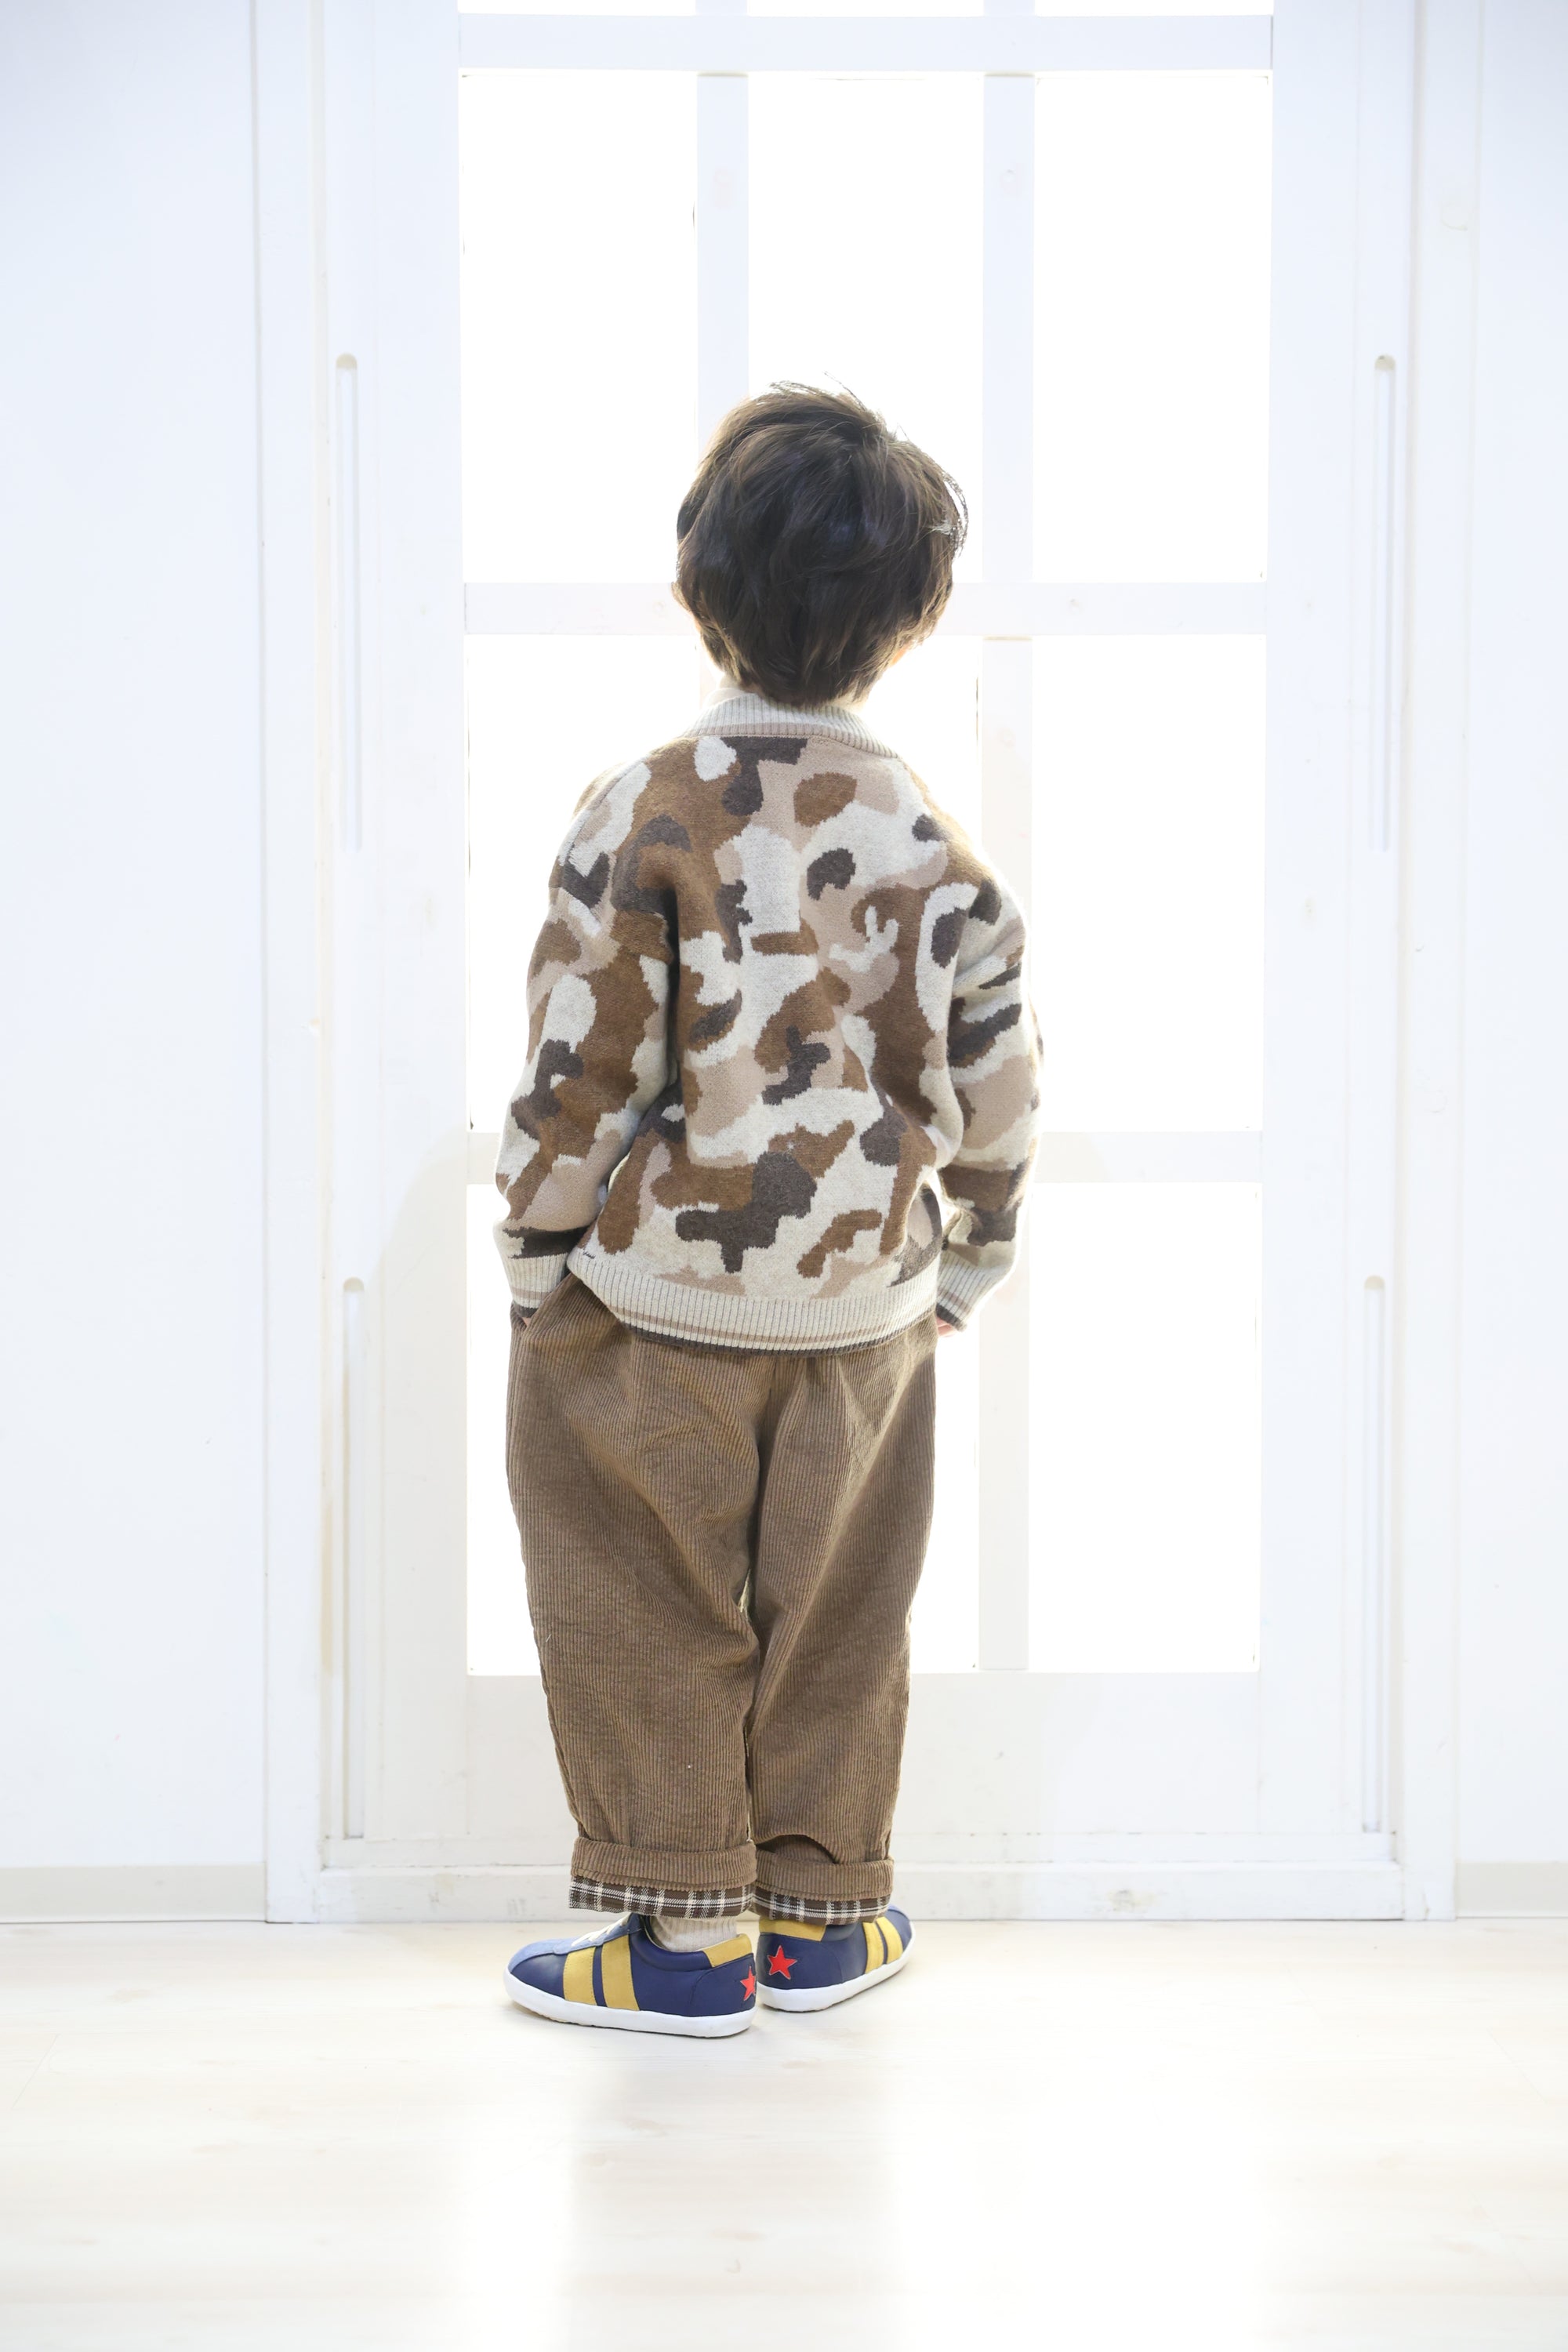 camouflage knit cardiganを着ている男の子